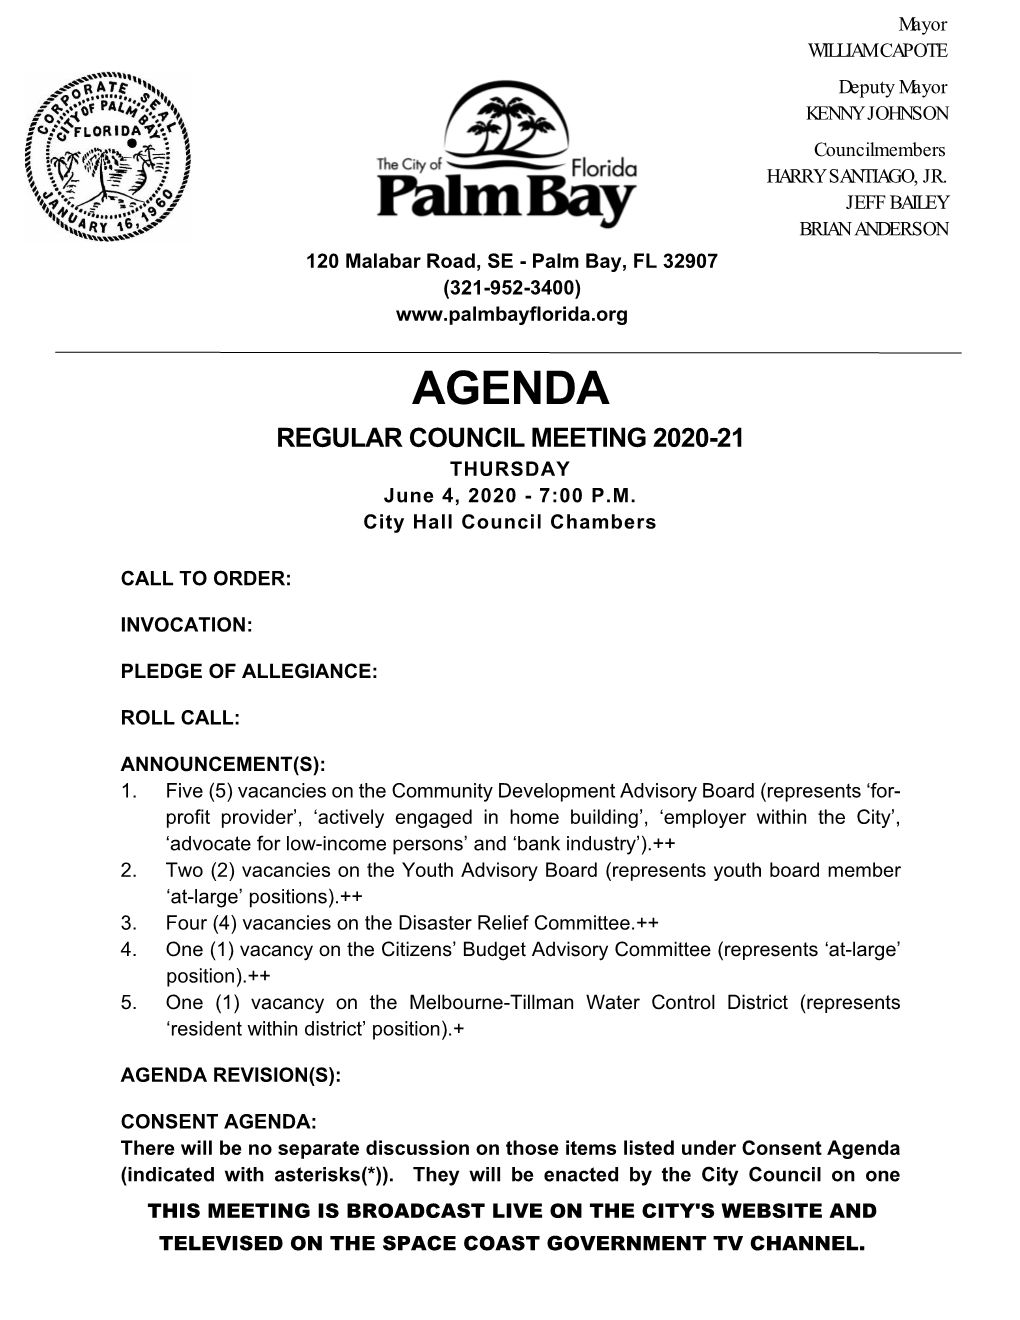 City of Palm Bay, Florida, June 4, 2020, Regular Council Meeting Agenda